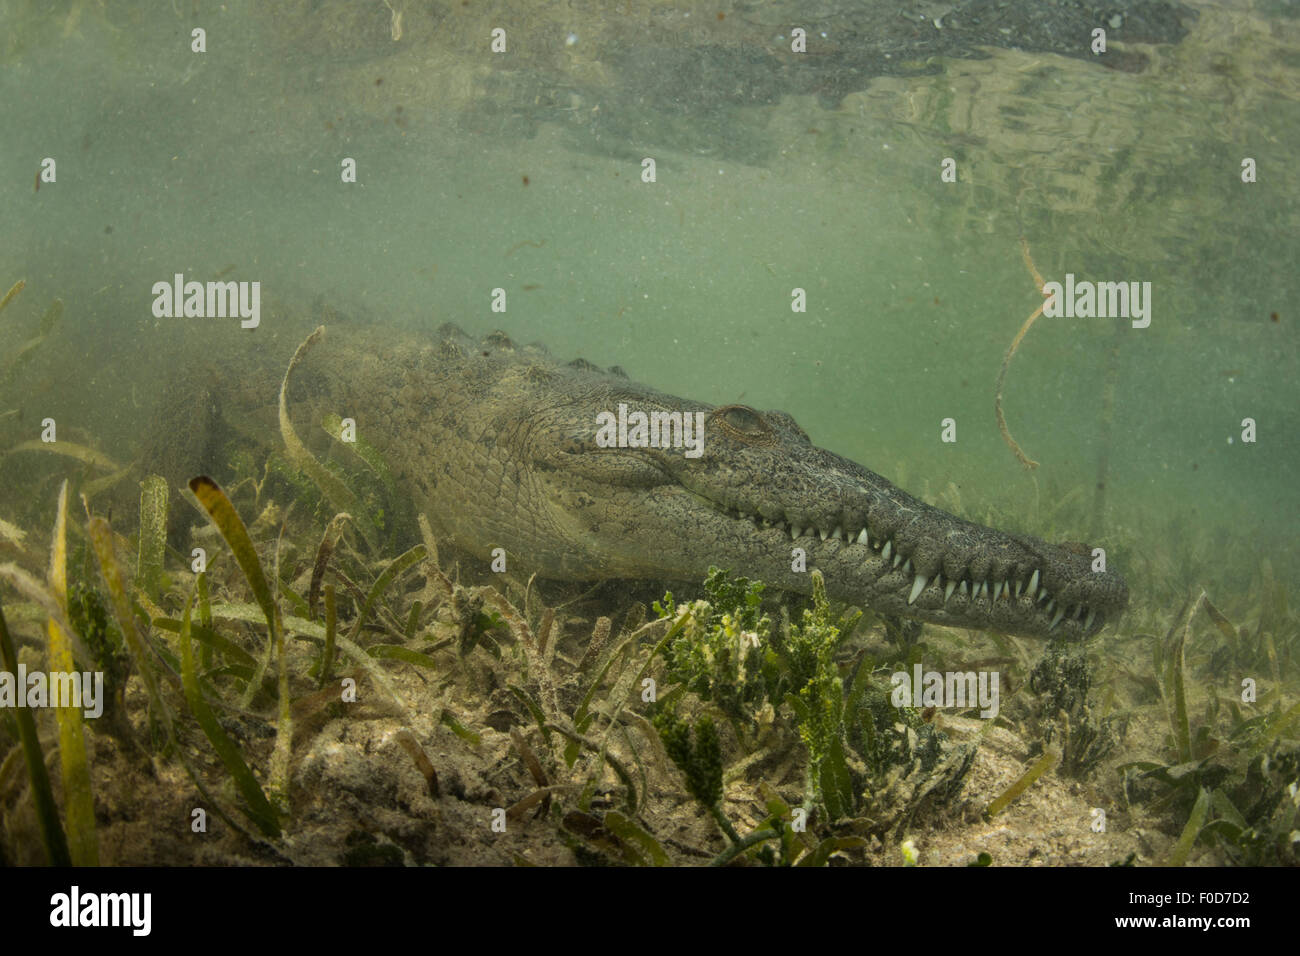 American saltwater crocodile (Crocodylus acutus) in mangrove, Jardines De La Reina, Cuba. Stock Photo